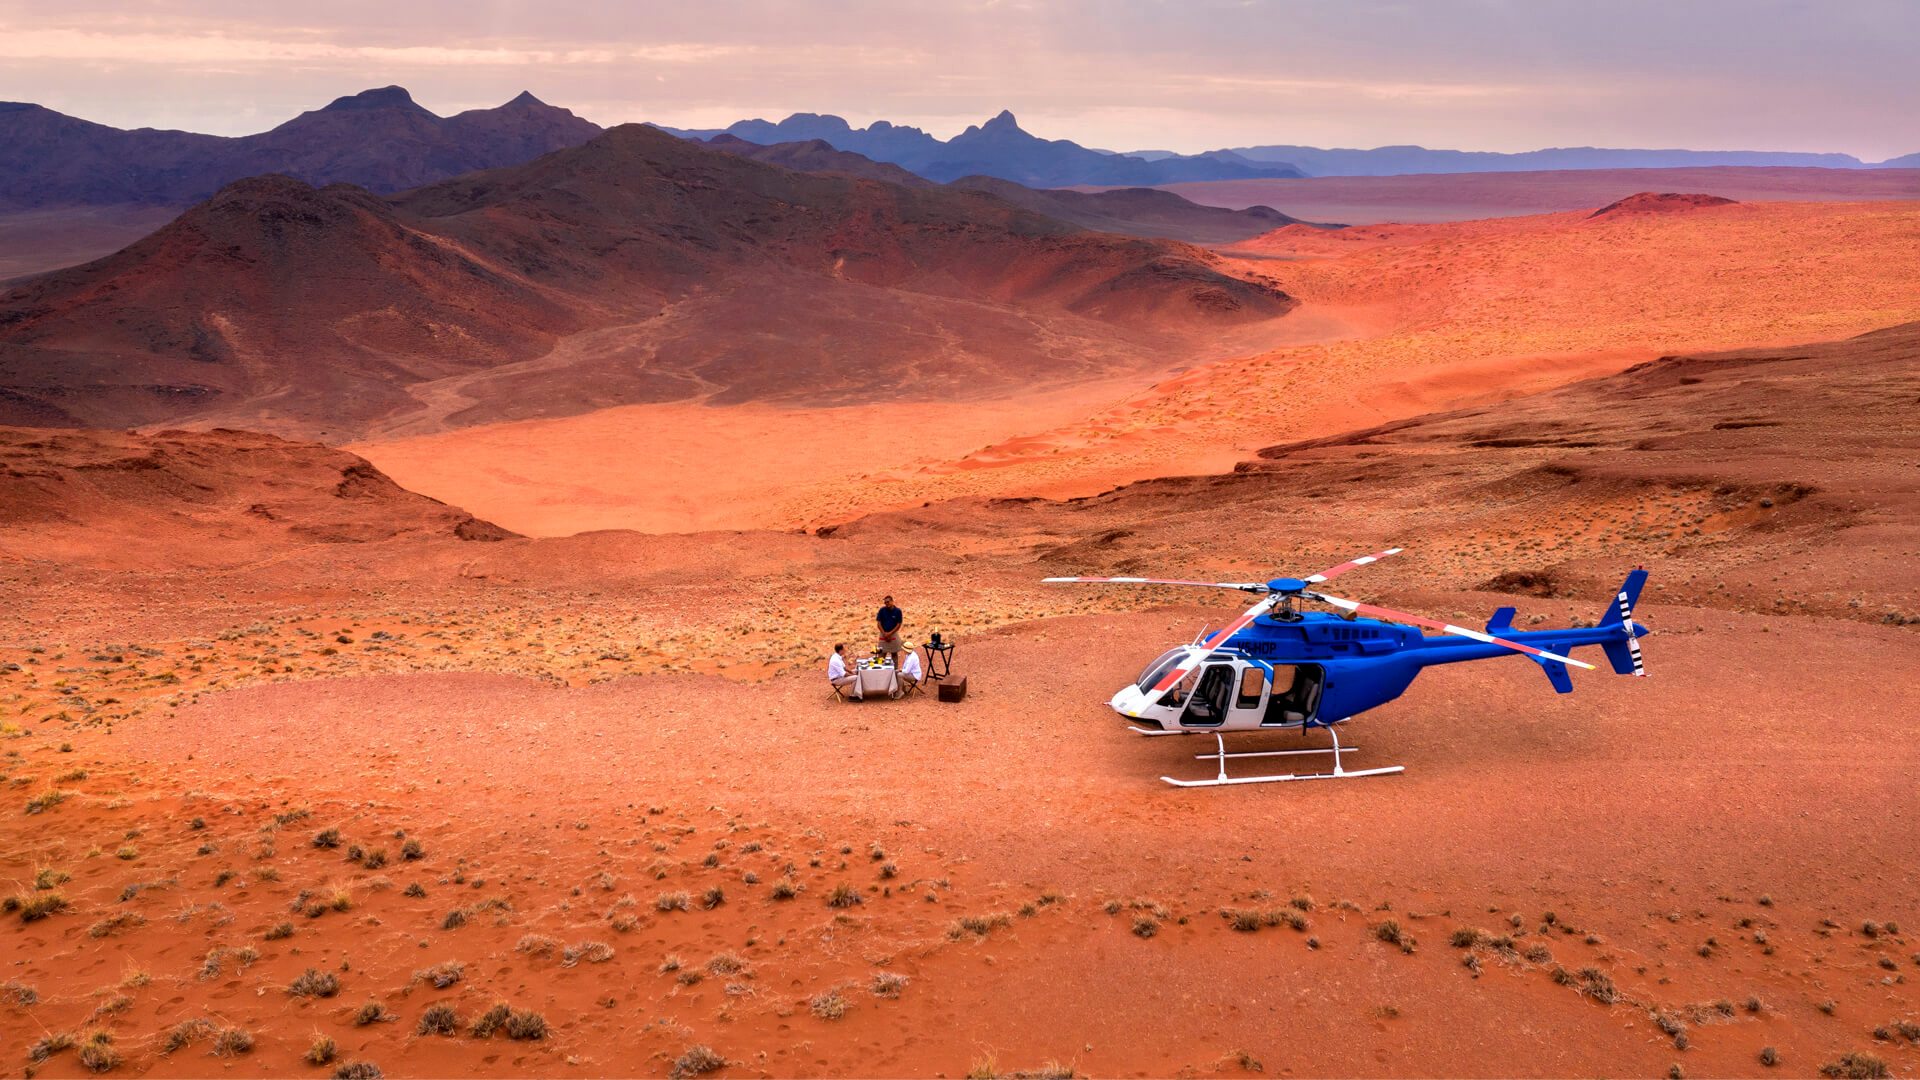 Morocco helicopter desert tour to Erg Chebbi dunes from Marrakech